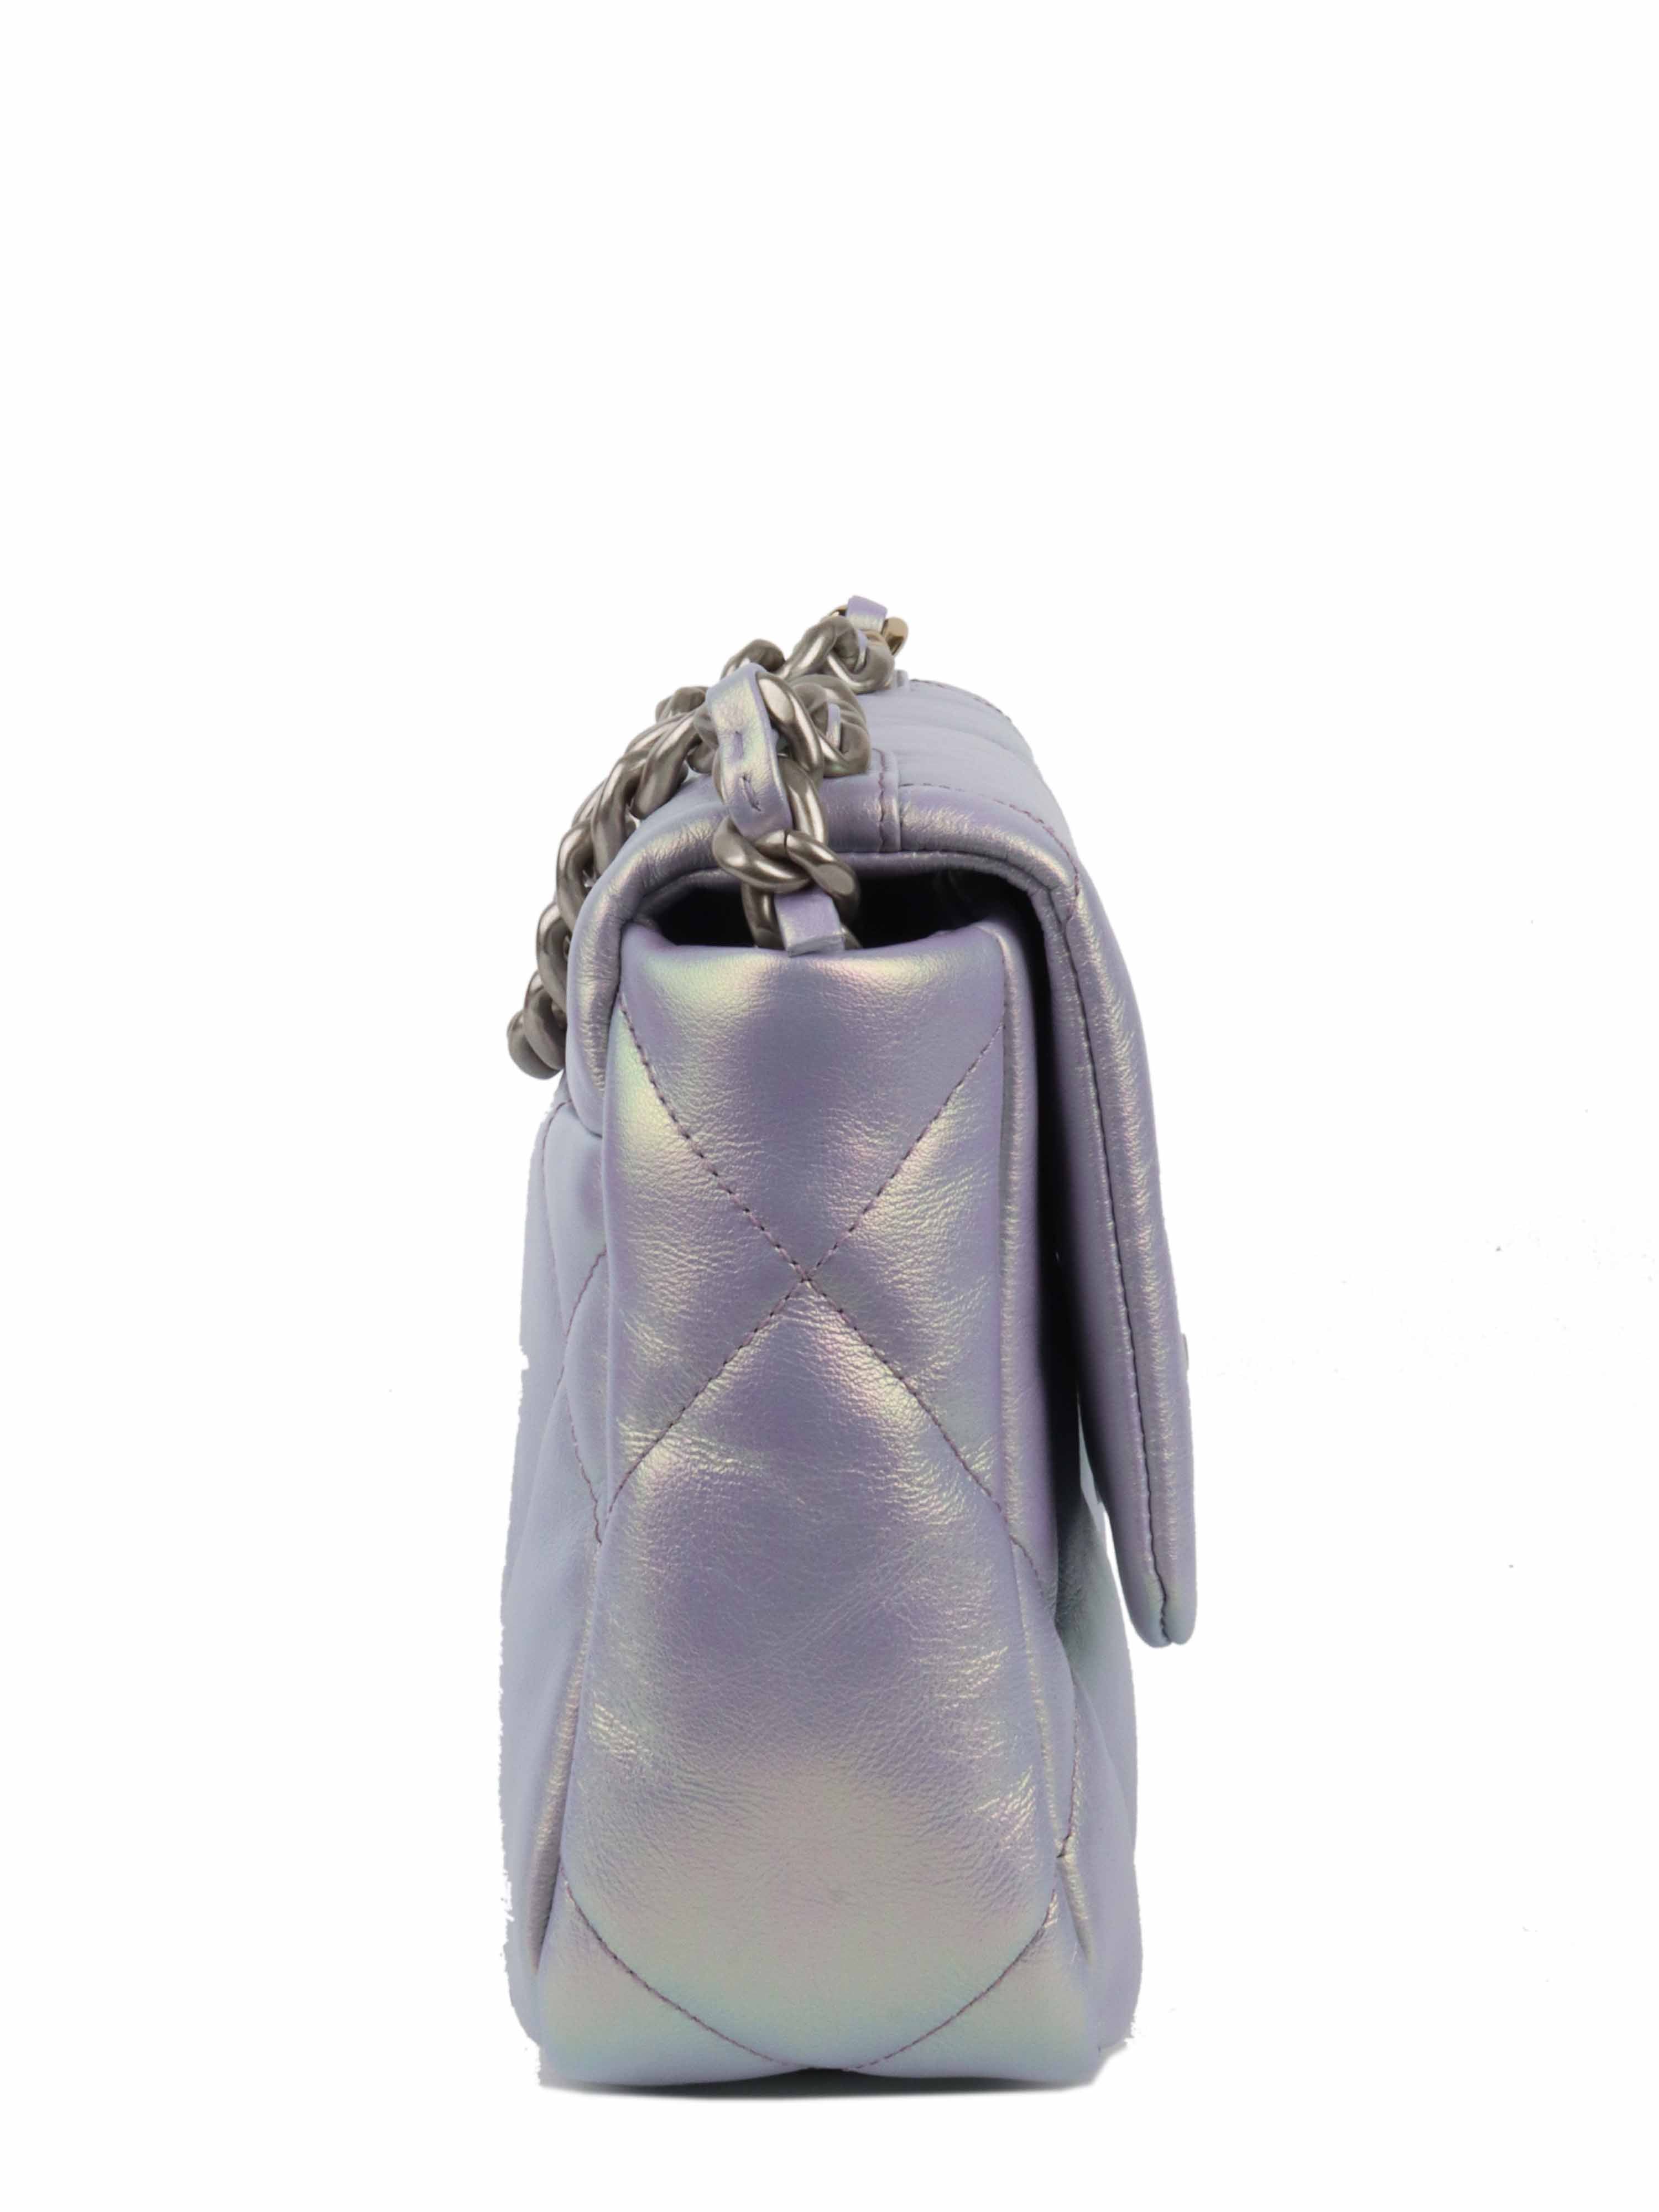 Chanel 22P Iridescent Light Purple Calfskin Quilted Small 19 Bag.